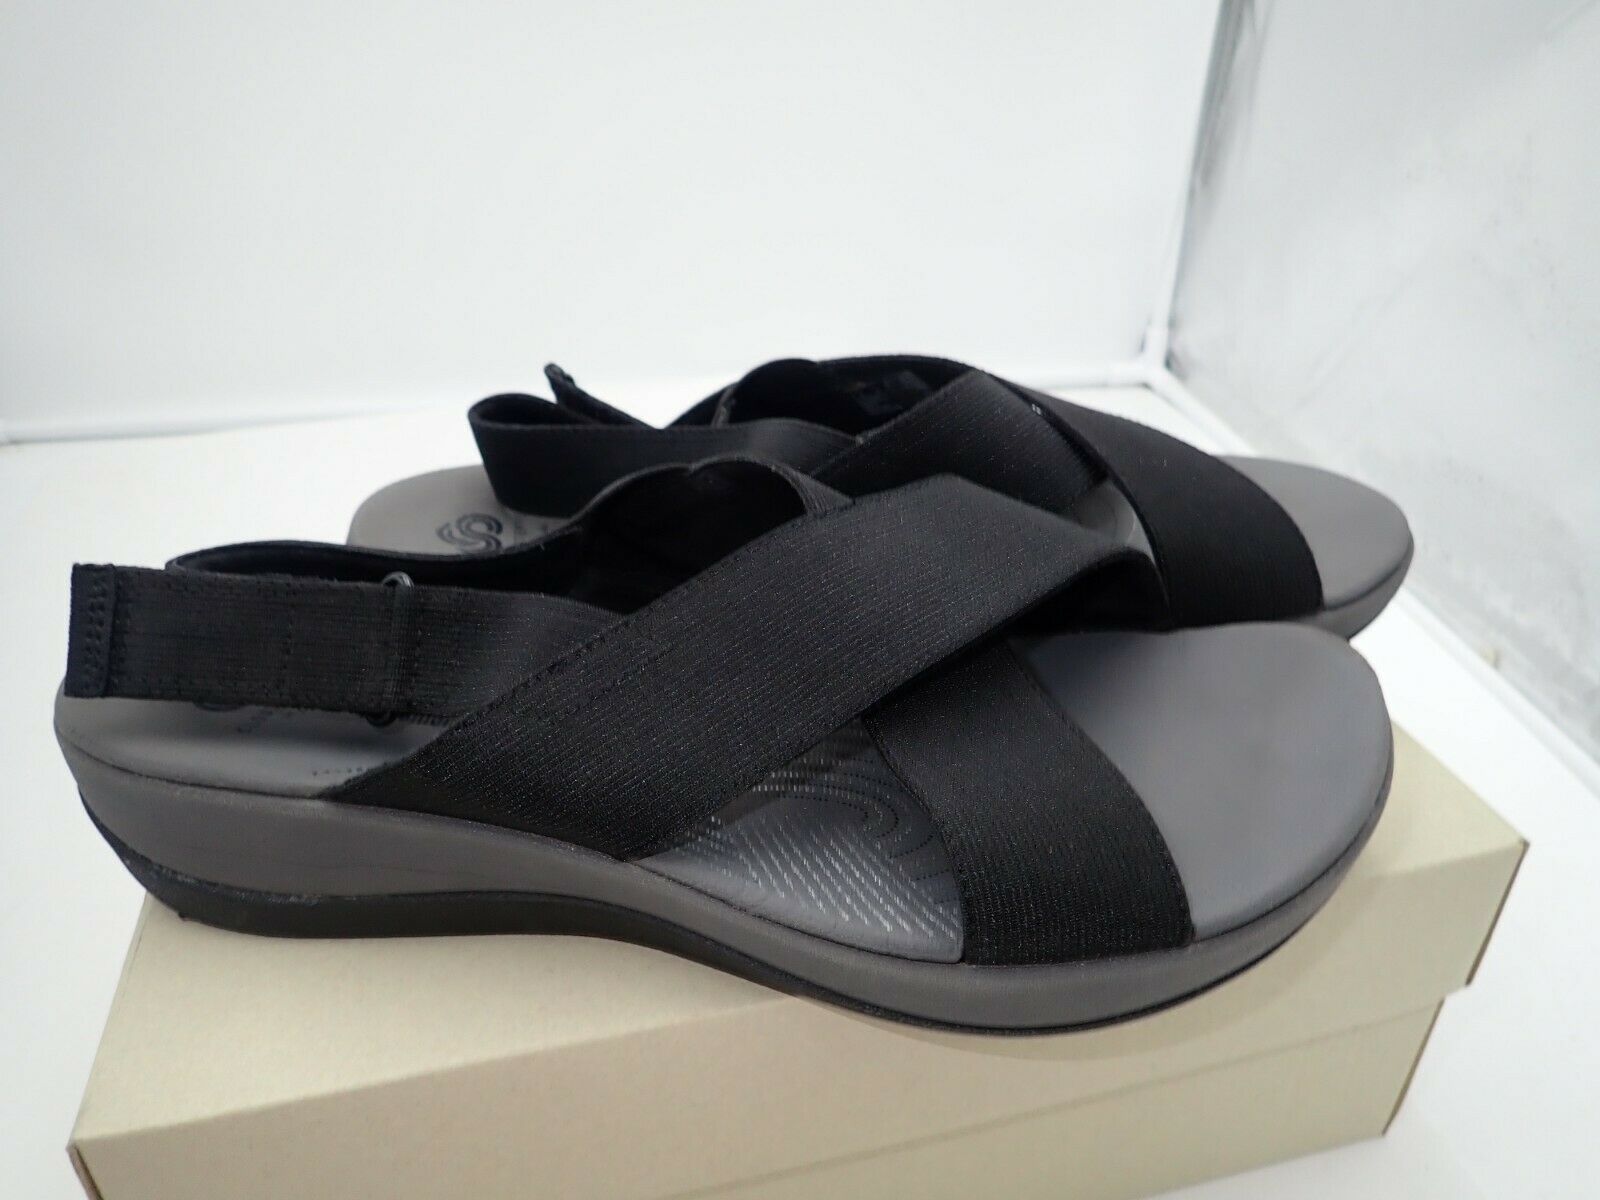 Clarks Women's Arla Kaydin Sandal 11 M Black Sandals - Sandals & Flip Flops